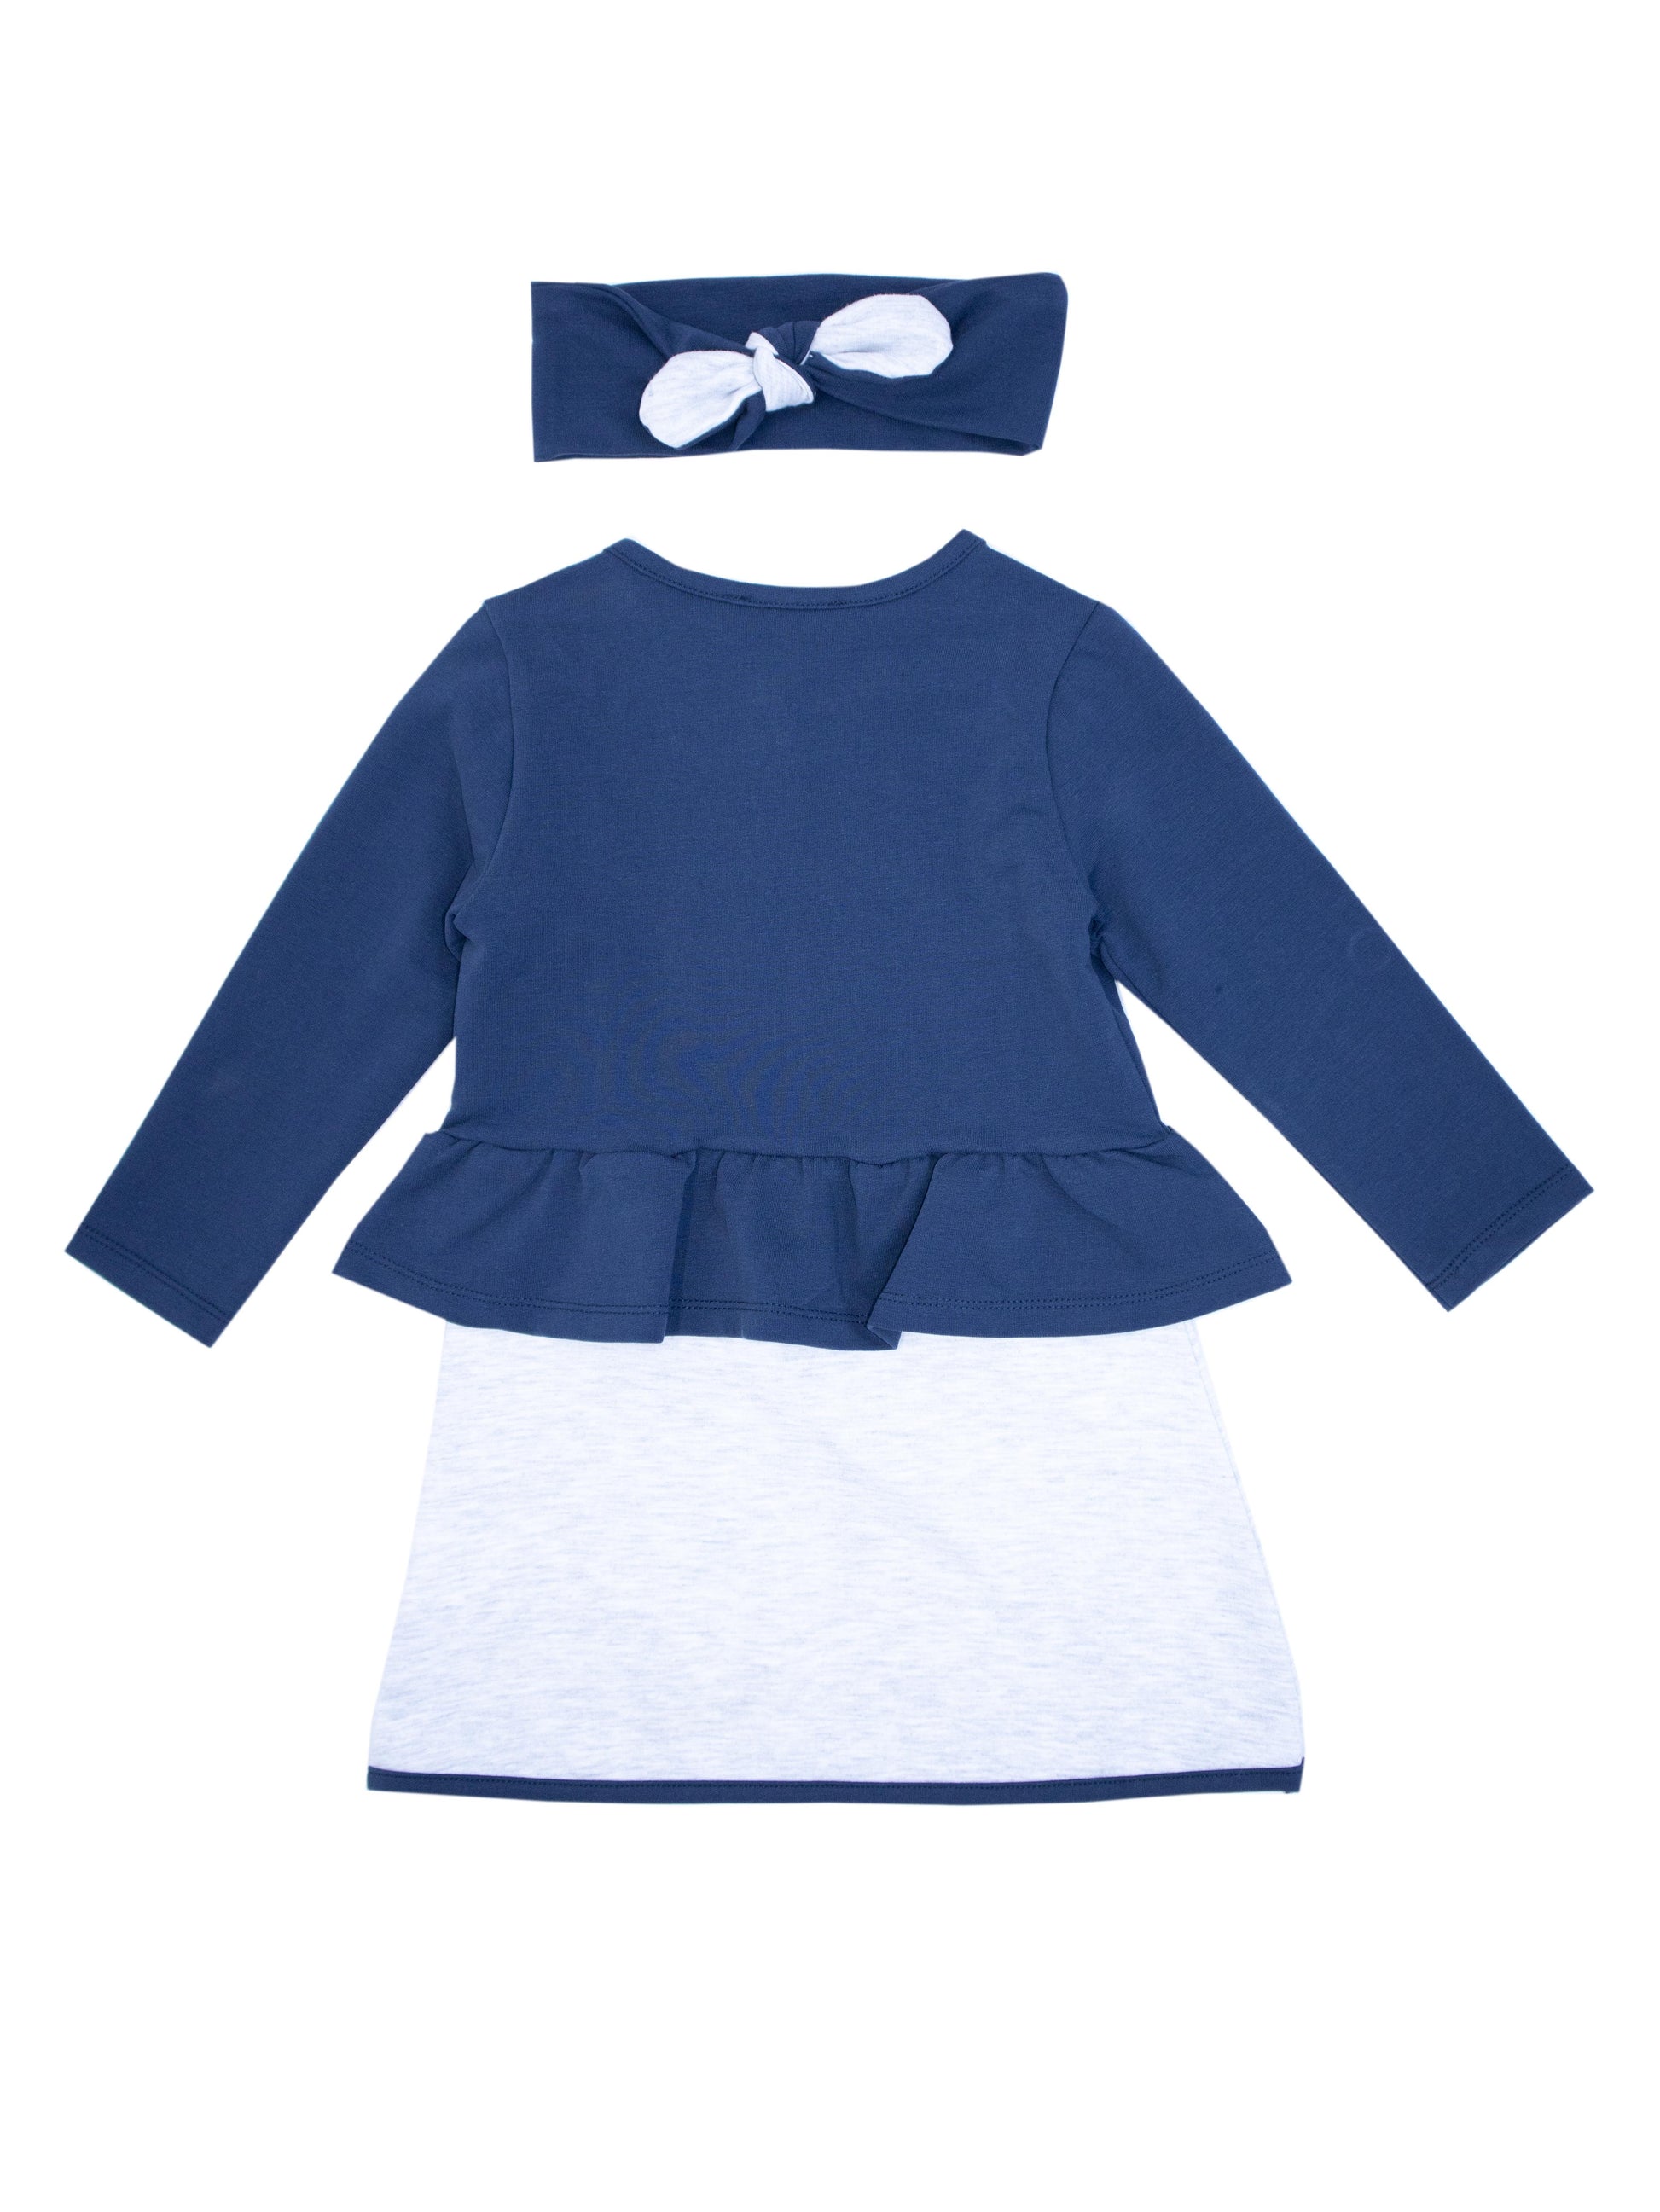 Children's Dress and Cardigan Set